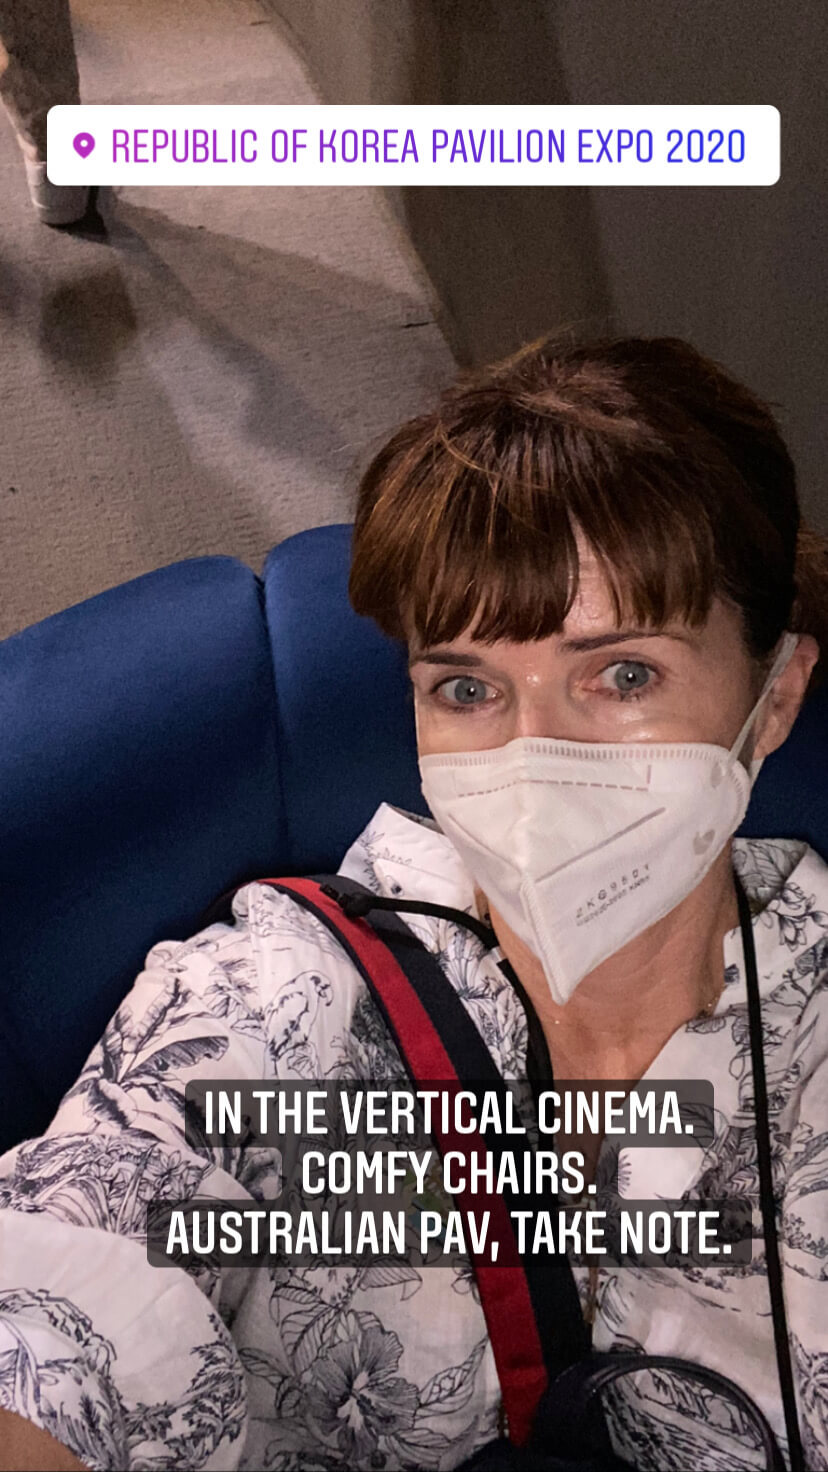 In the vertical cinema